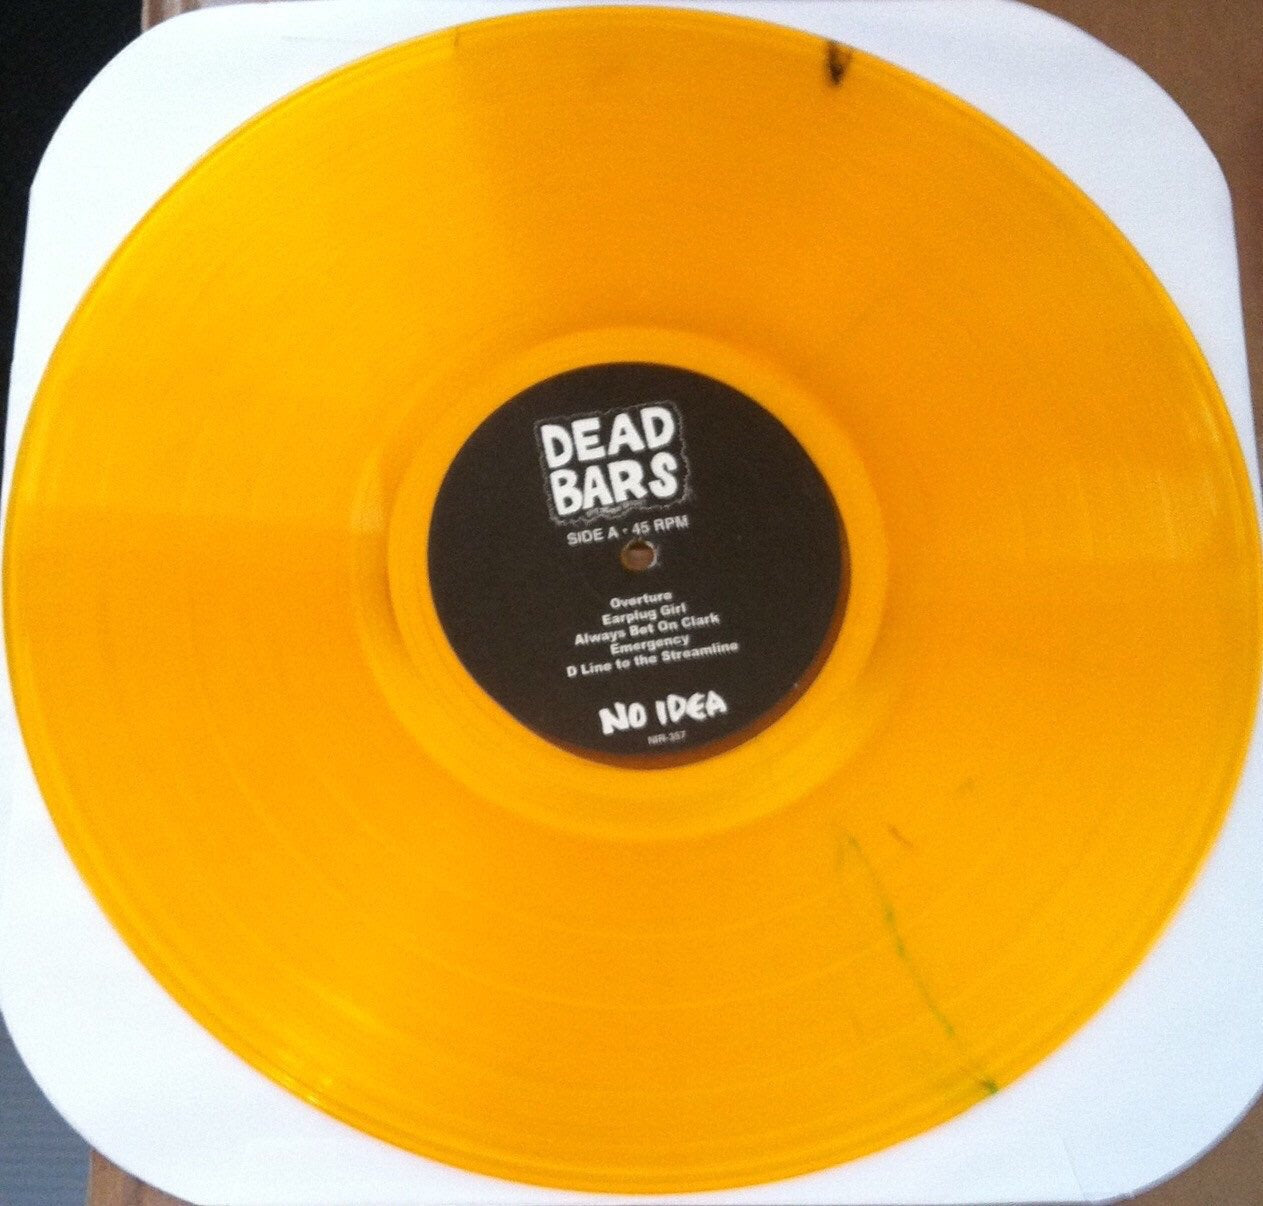 DEAD BARS "Dream Gig" SWEETHEARTS TOUR Limited Screenprinted LP